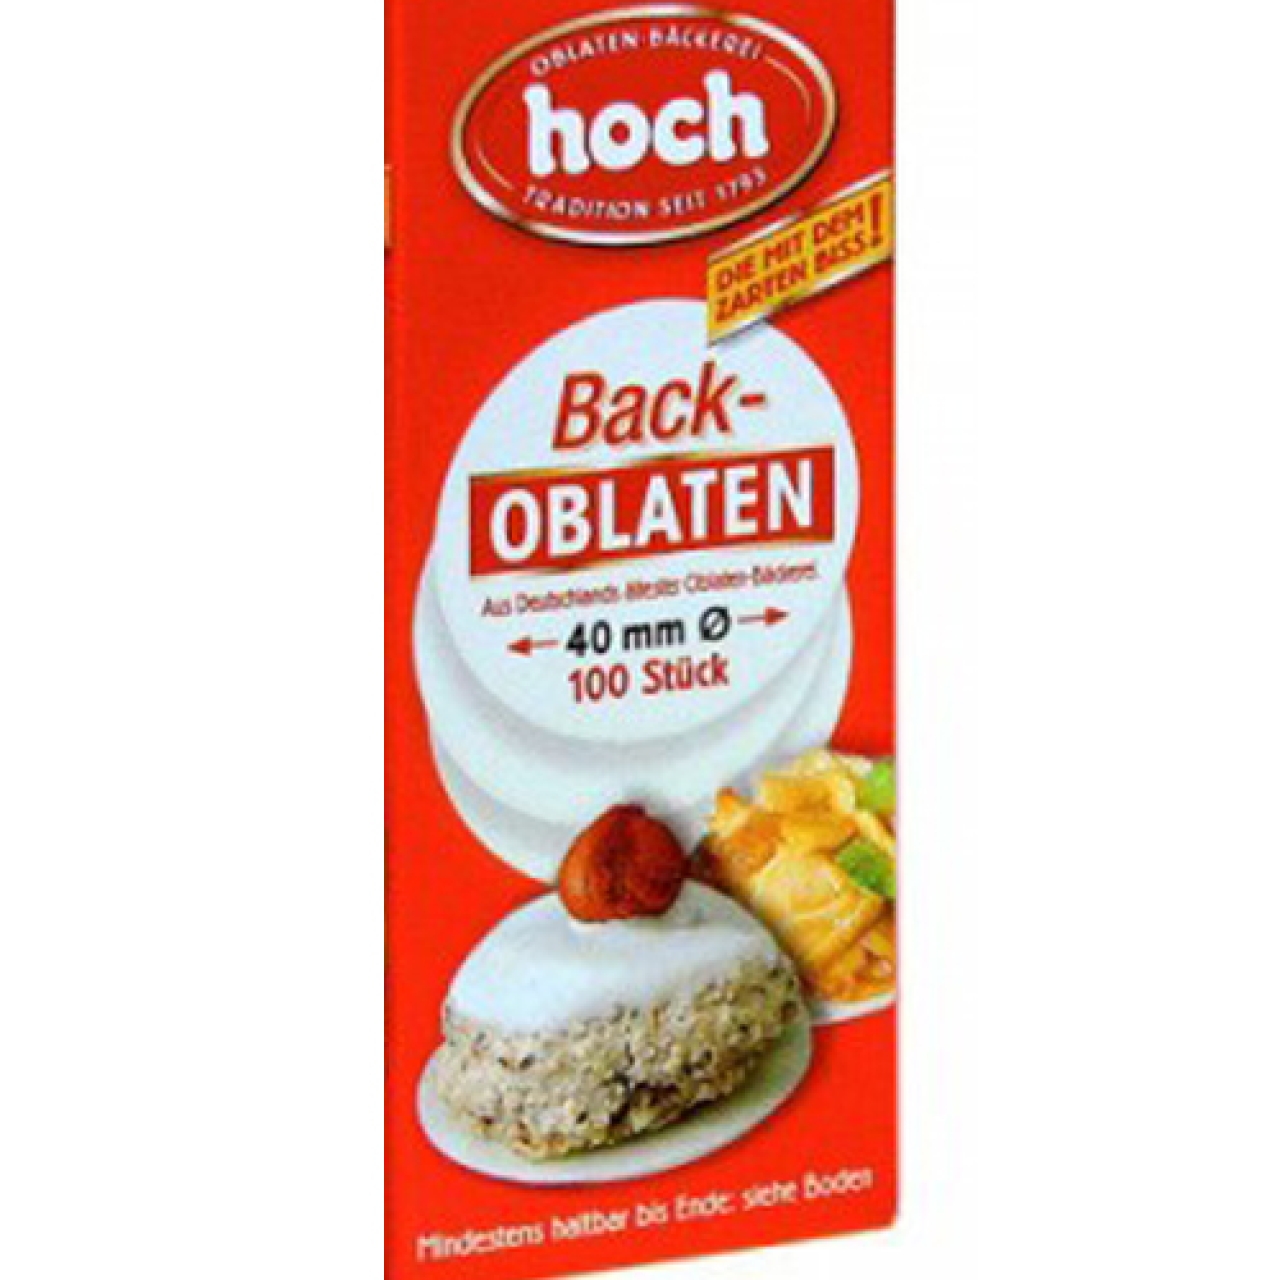 Oblaten-Bäckerei hoch, Back-Oblaten, rund, 40 mm, 100 Stück